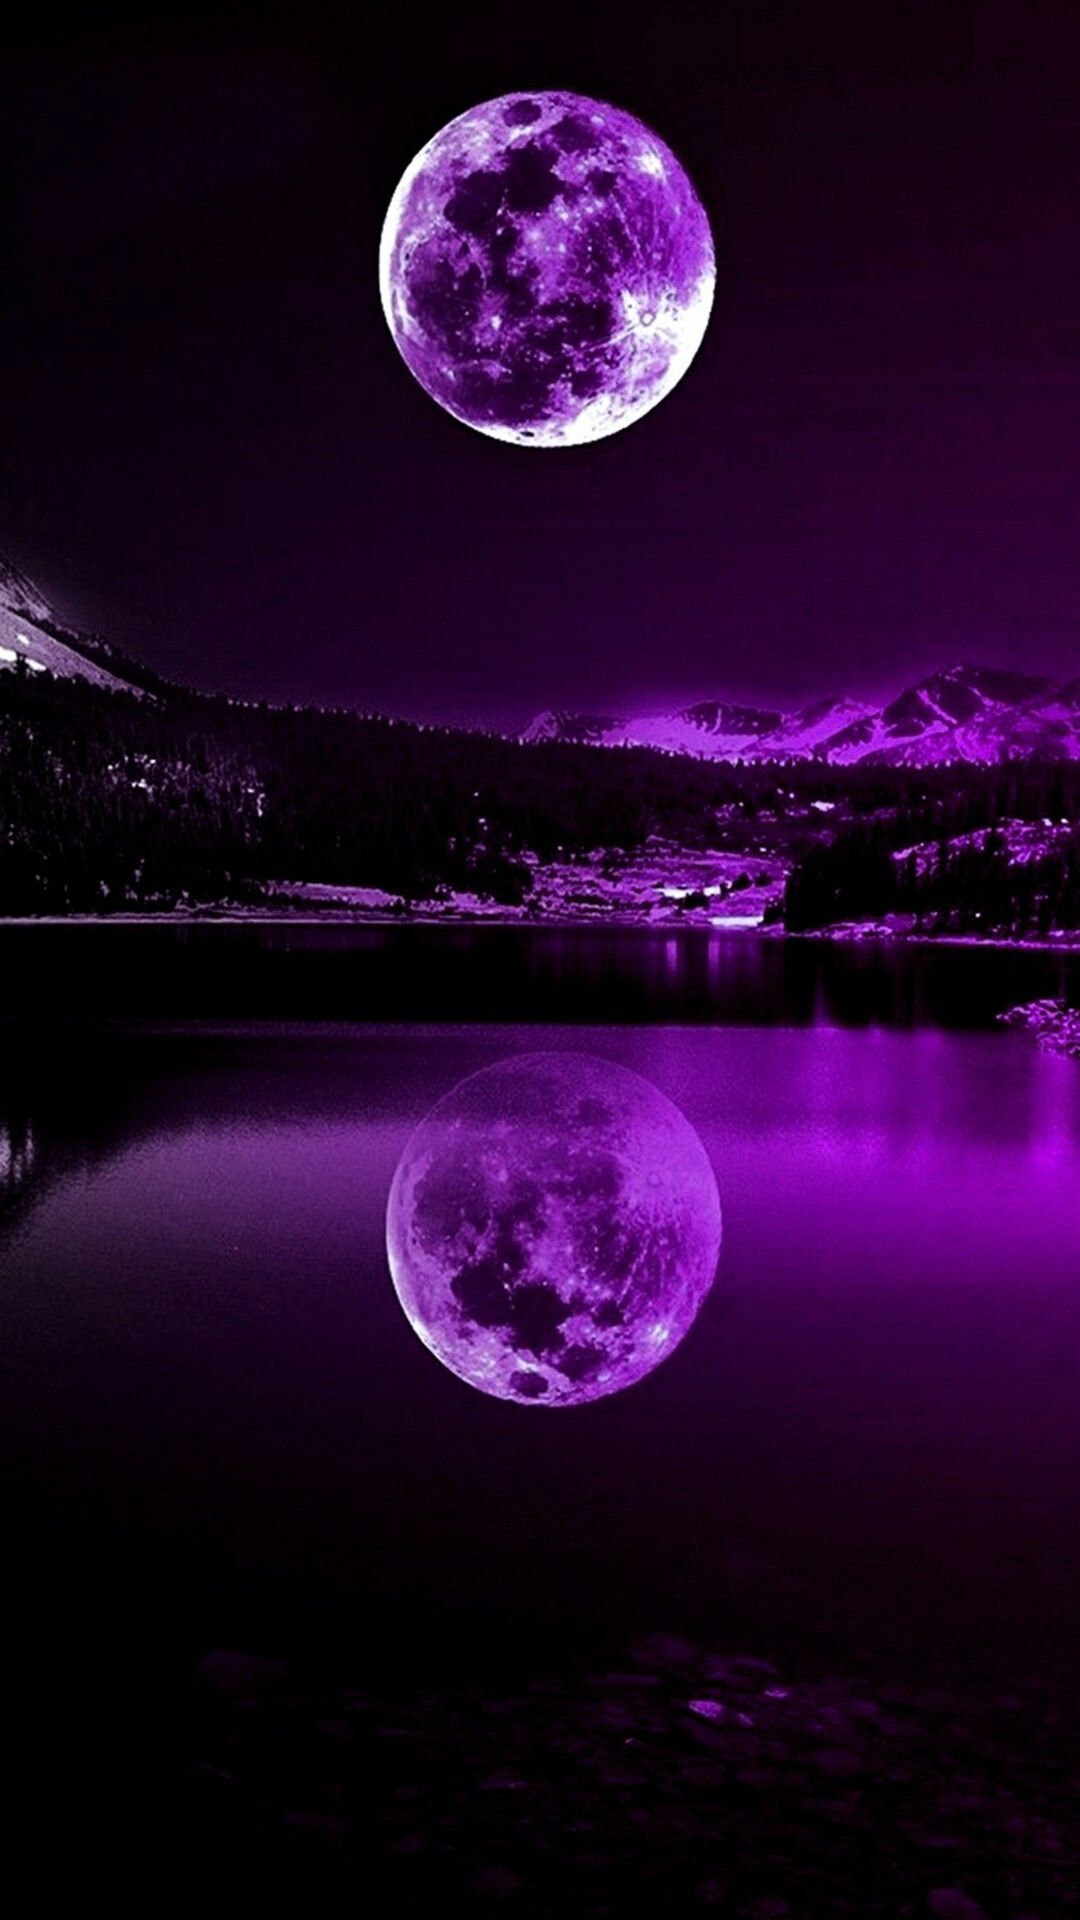 Purple Moon Wallpapers